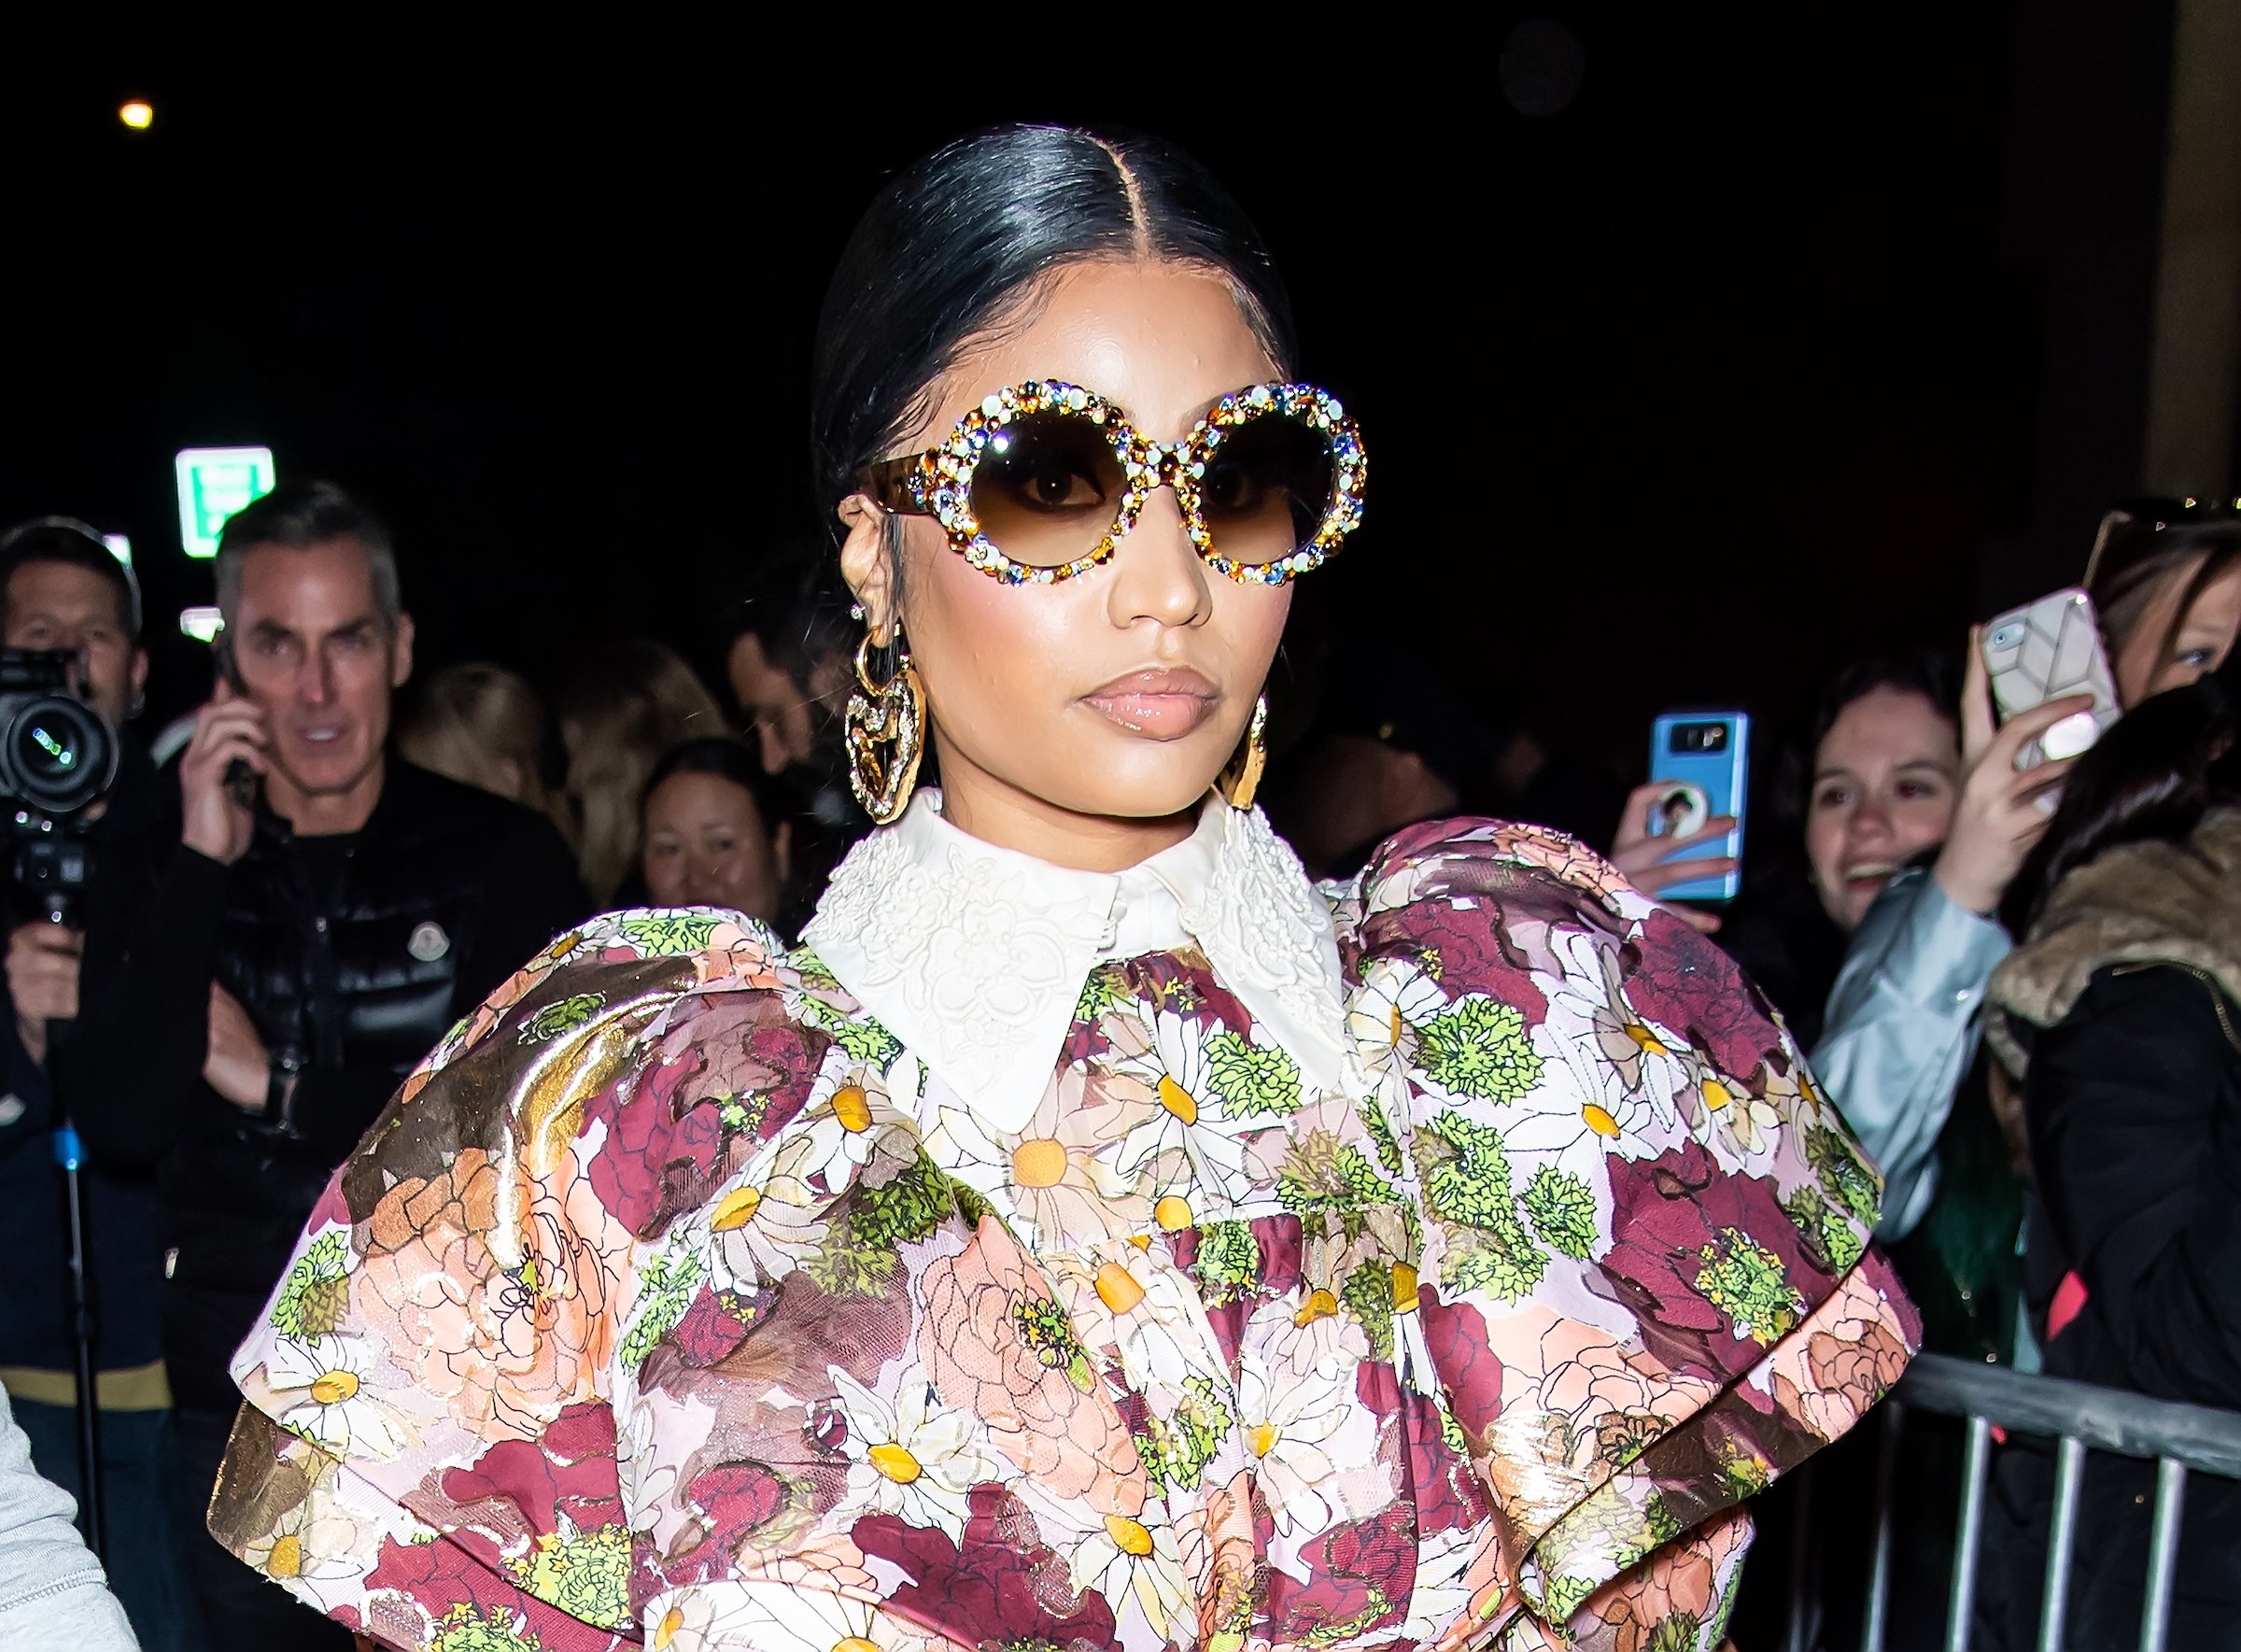 Nicki Minaj, who sampled Rick James, wearing sunglasses and a multicolored top